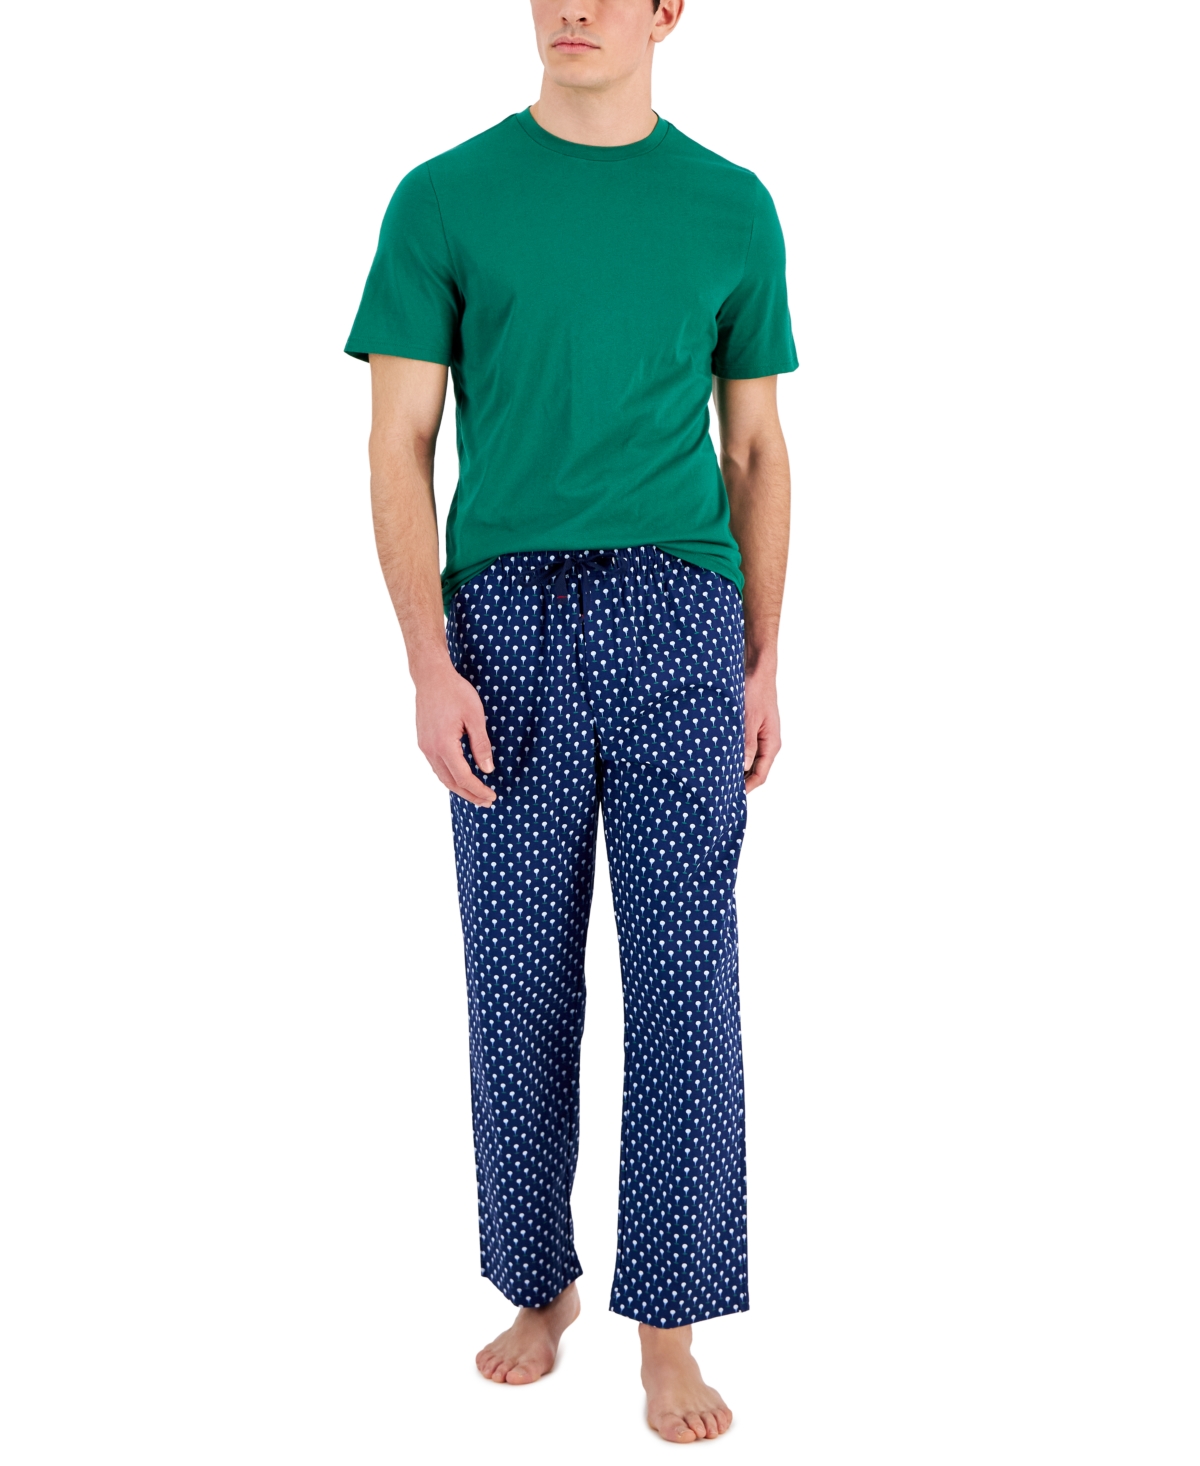 Men's 2-Pc. Solid T-Shirt & Golf Ball-Print Pajama Pants Set, Created for Macy's - Fday Set